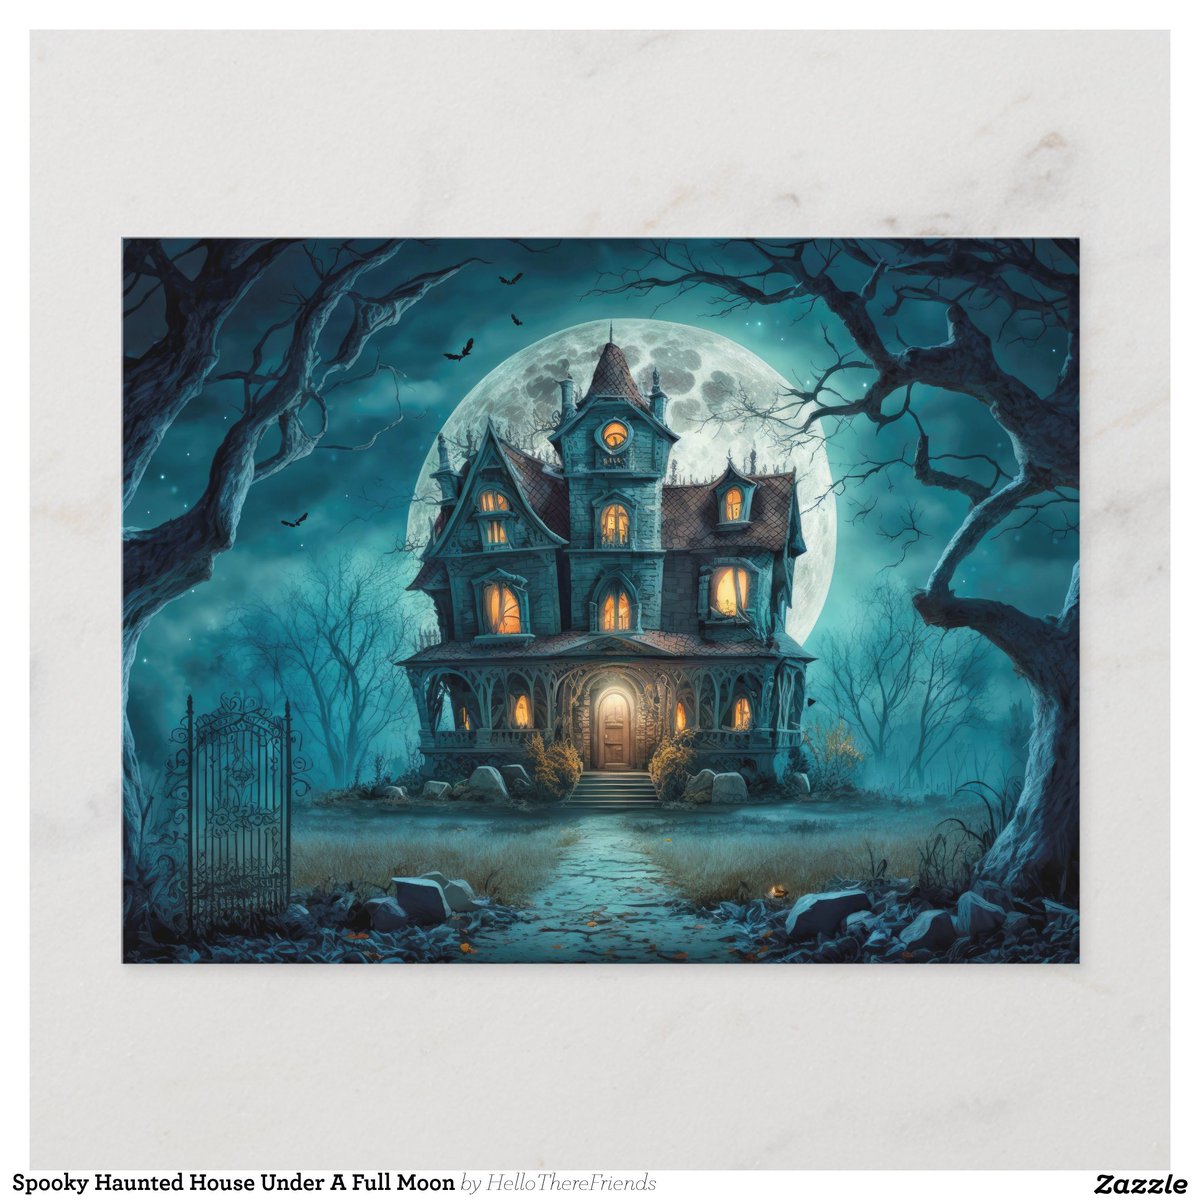 Spooky Haunted House Under A Full Moon Postcard→zazzle.com/z/amhk1z1a?rf=…

#Halloween #Postcards #Holidays #HappyHalloween #HalloweenPostcards #HauntedHouse #Pumpkins #Spooky